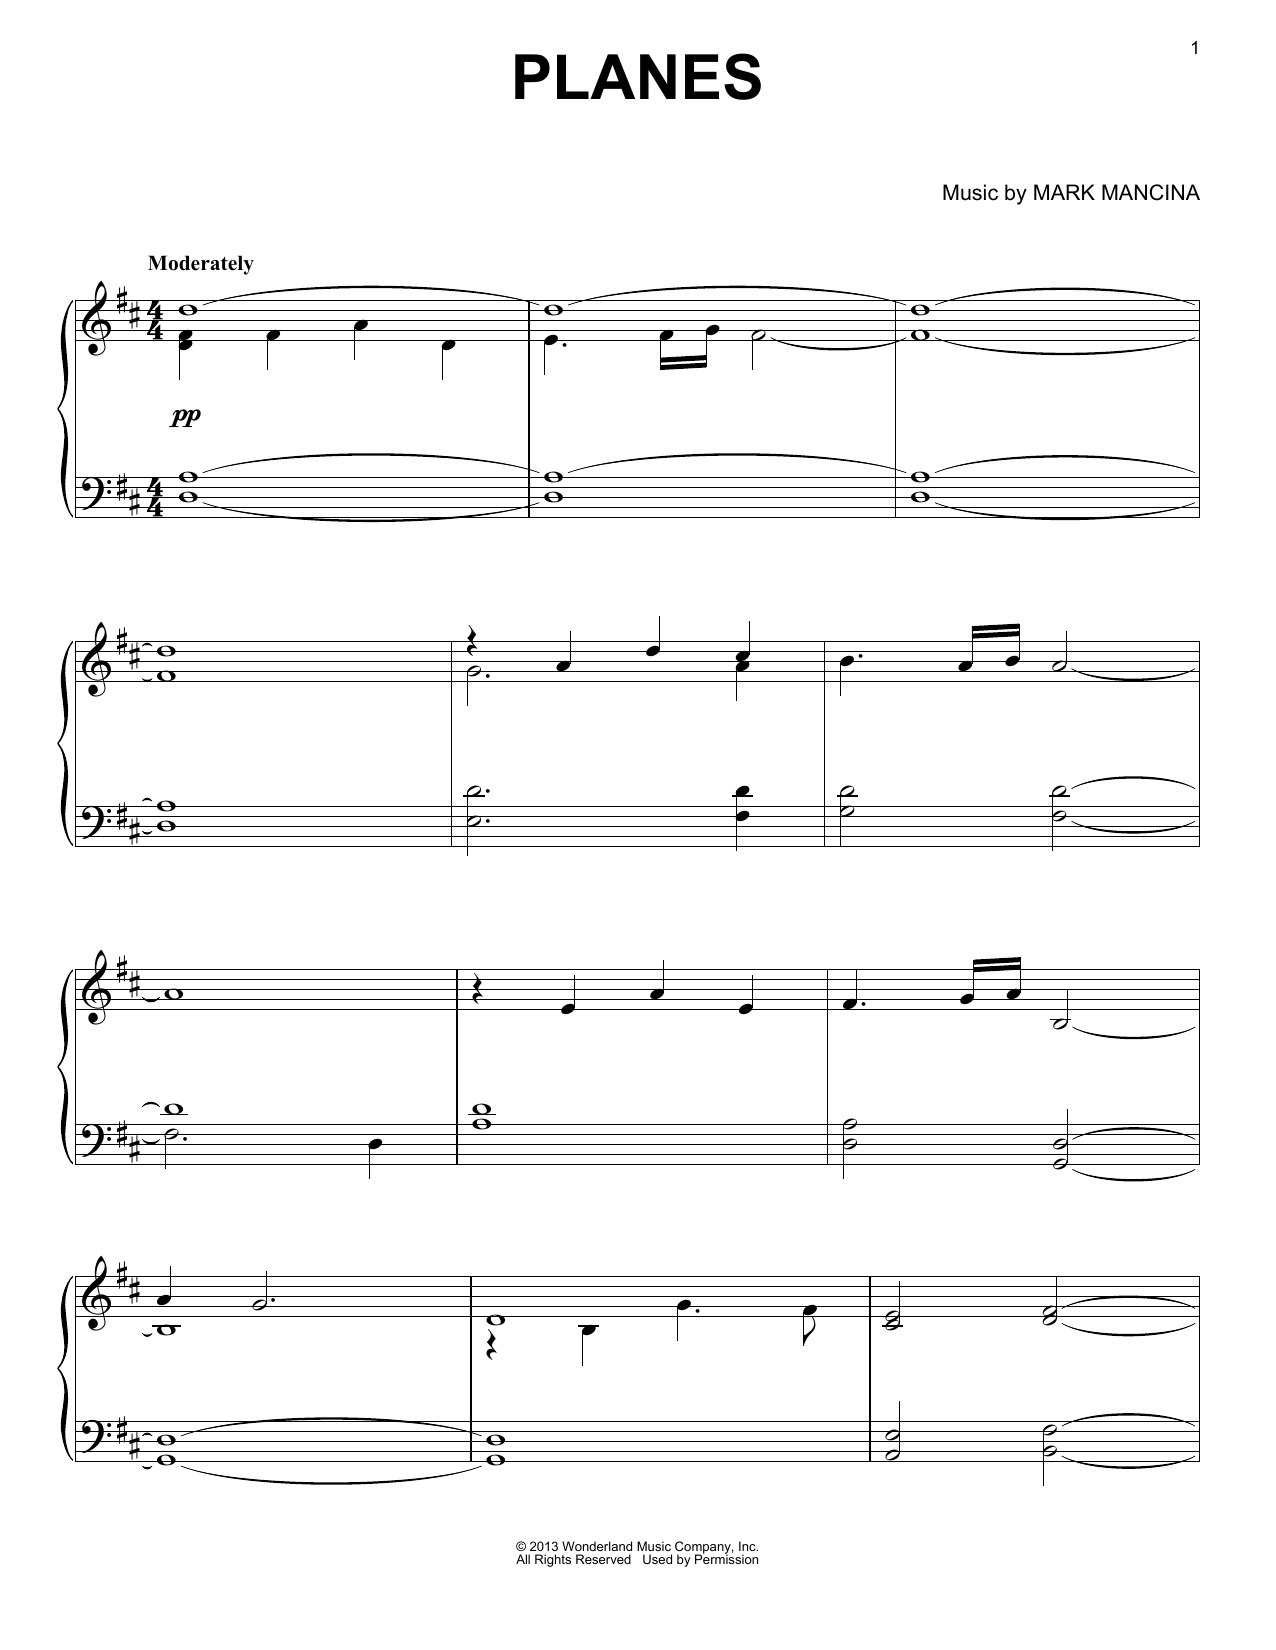 Mark Mancina Planes Sheet Music Notes & Chords for Piano - Download or Print PDF